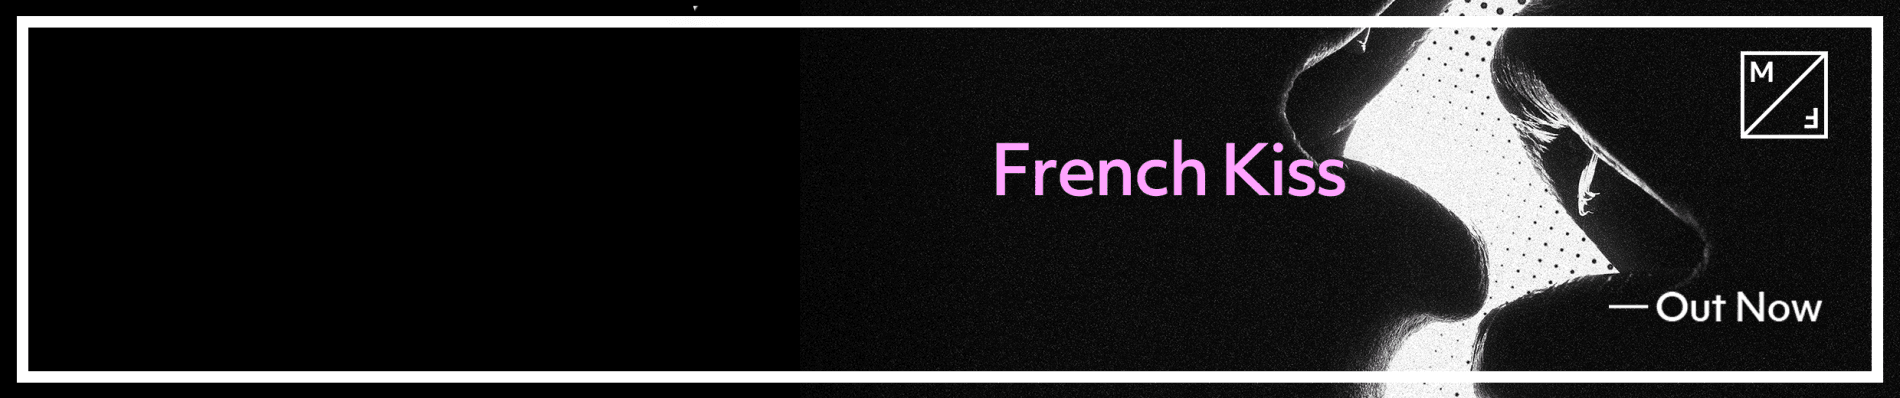 French Kiss header